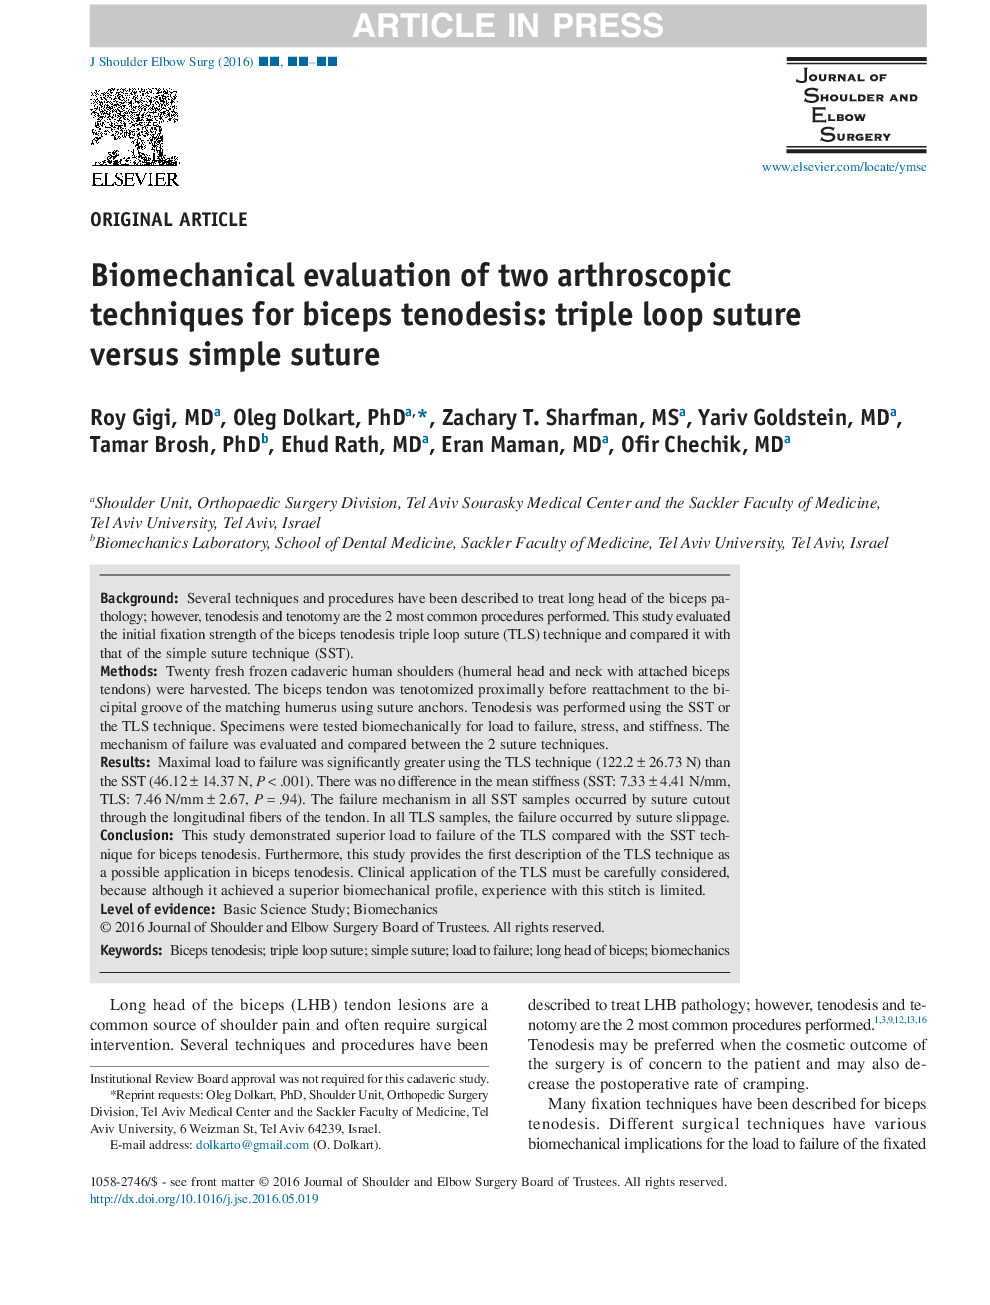 Biomechanical evaluation of two arthroscopic techniques for biceps tenodesis: triple loop suture versus simple suture